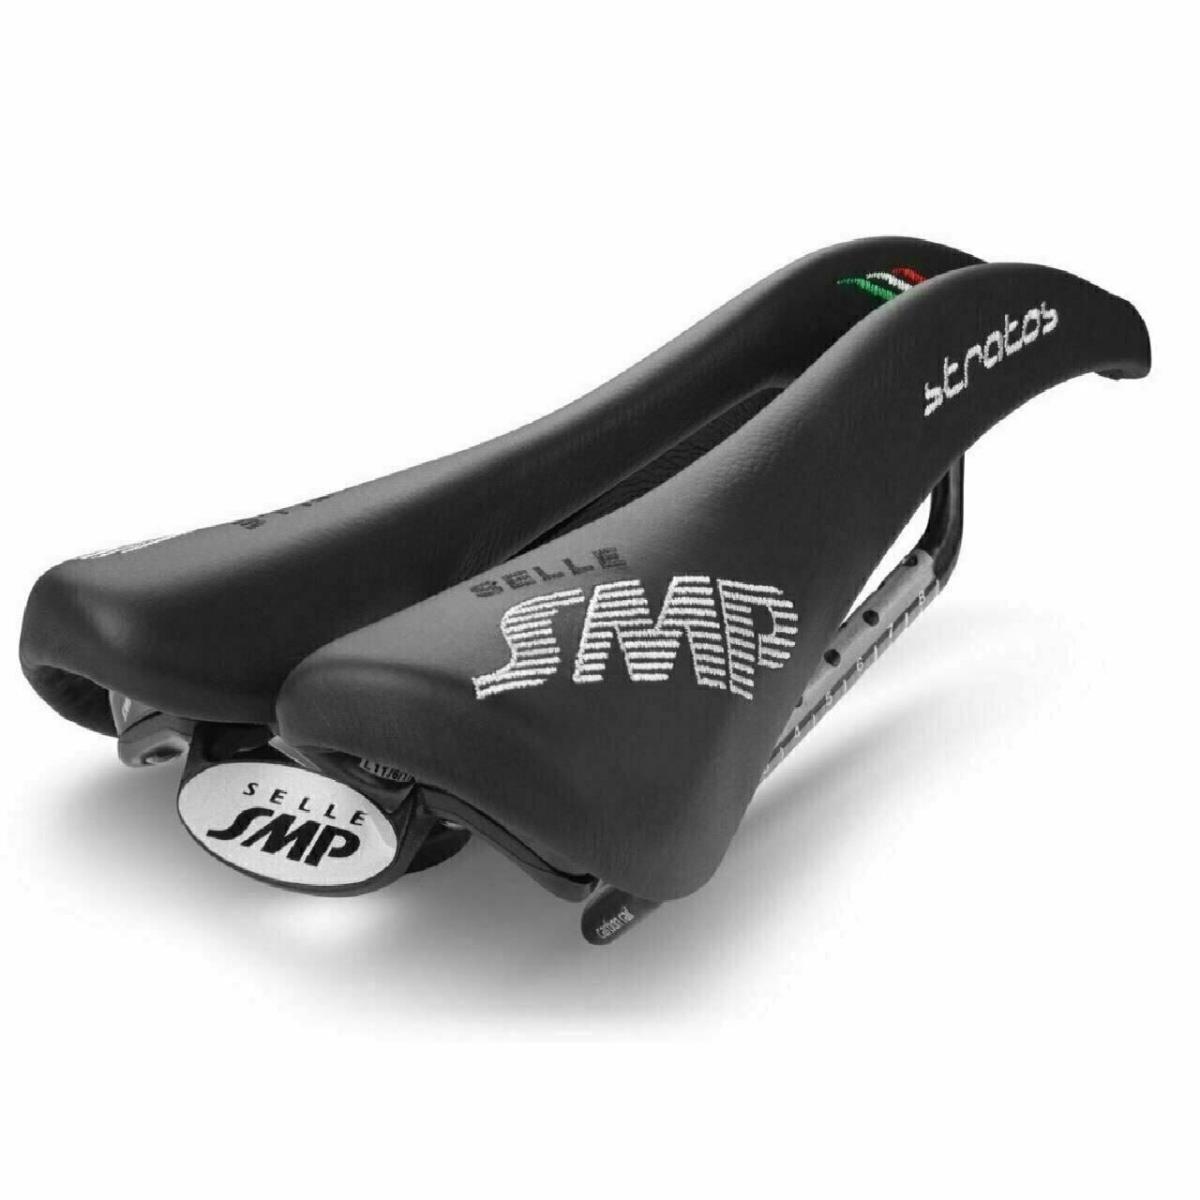 Selle Smp Stratos Carbon Rail Pro Bike Saddle Bike Seat